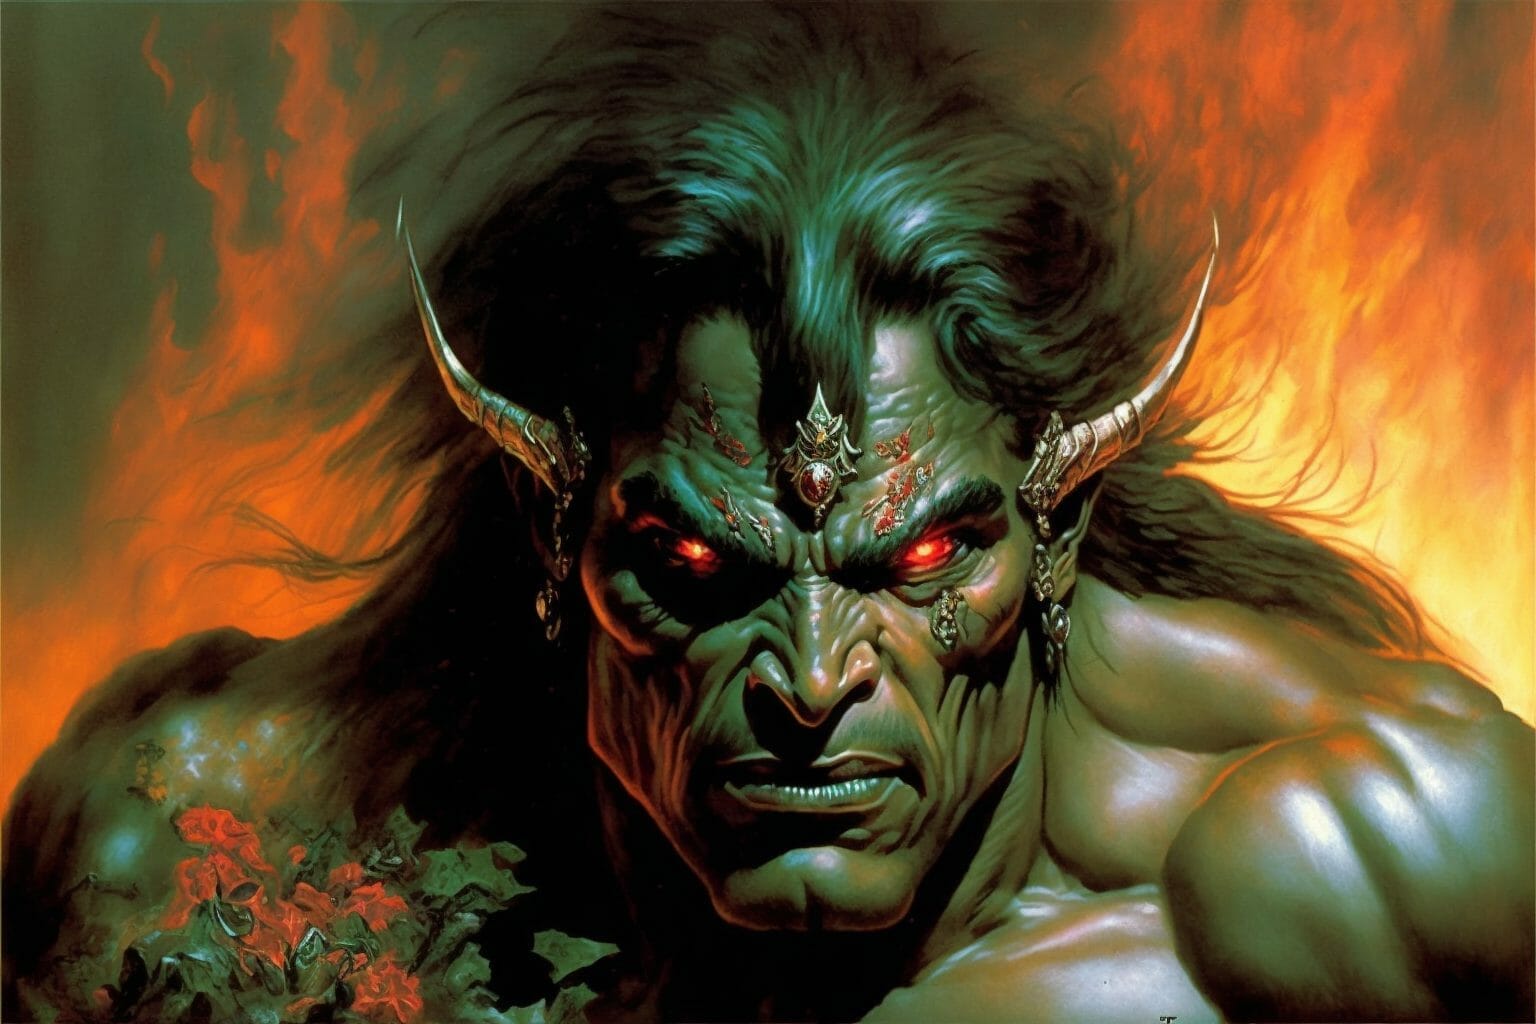 AI: Hulk-like human with demon horns